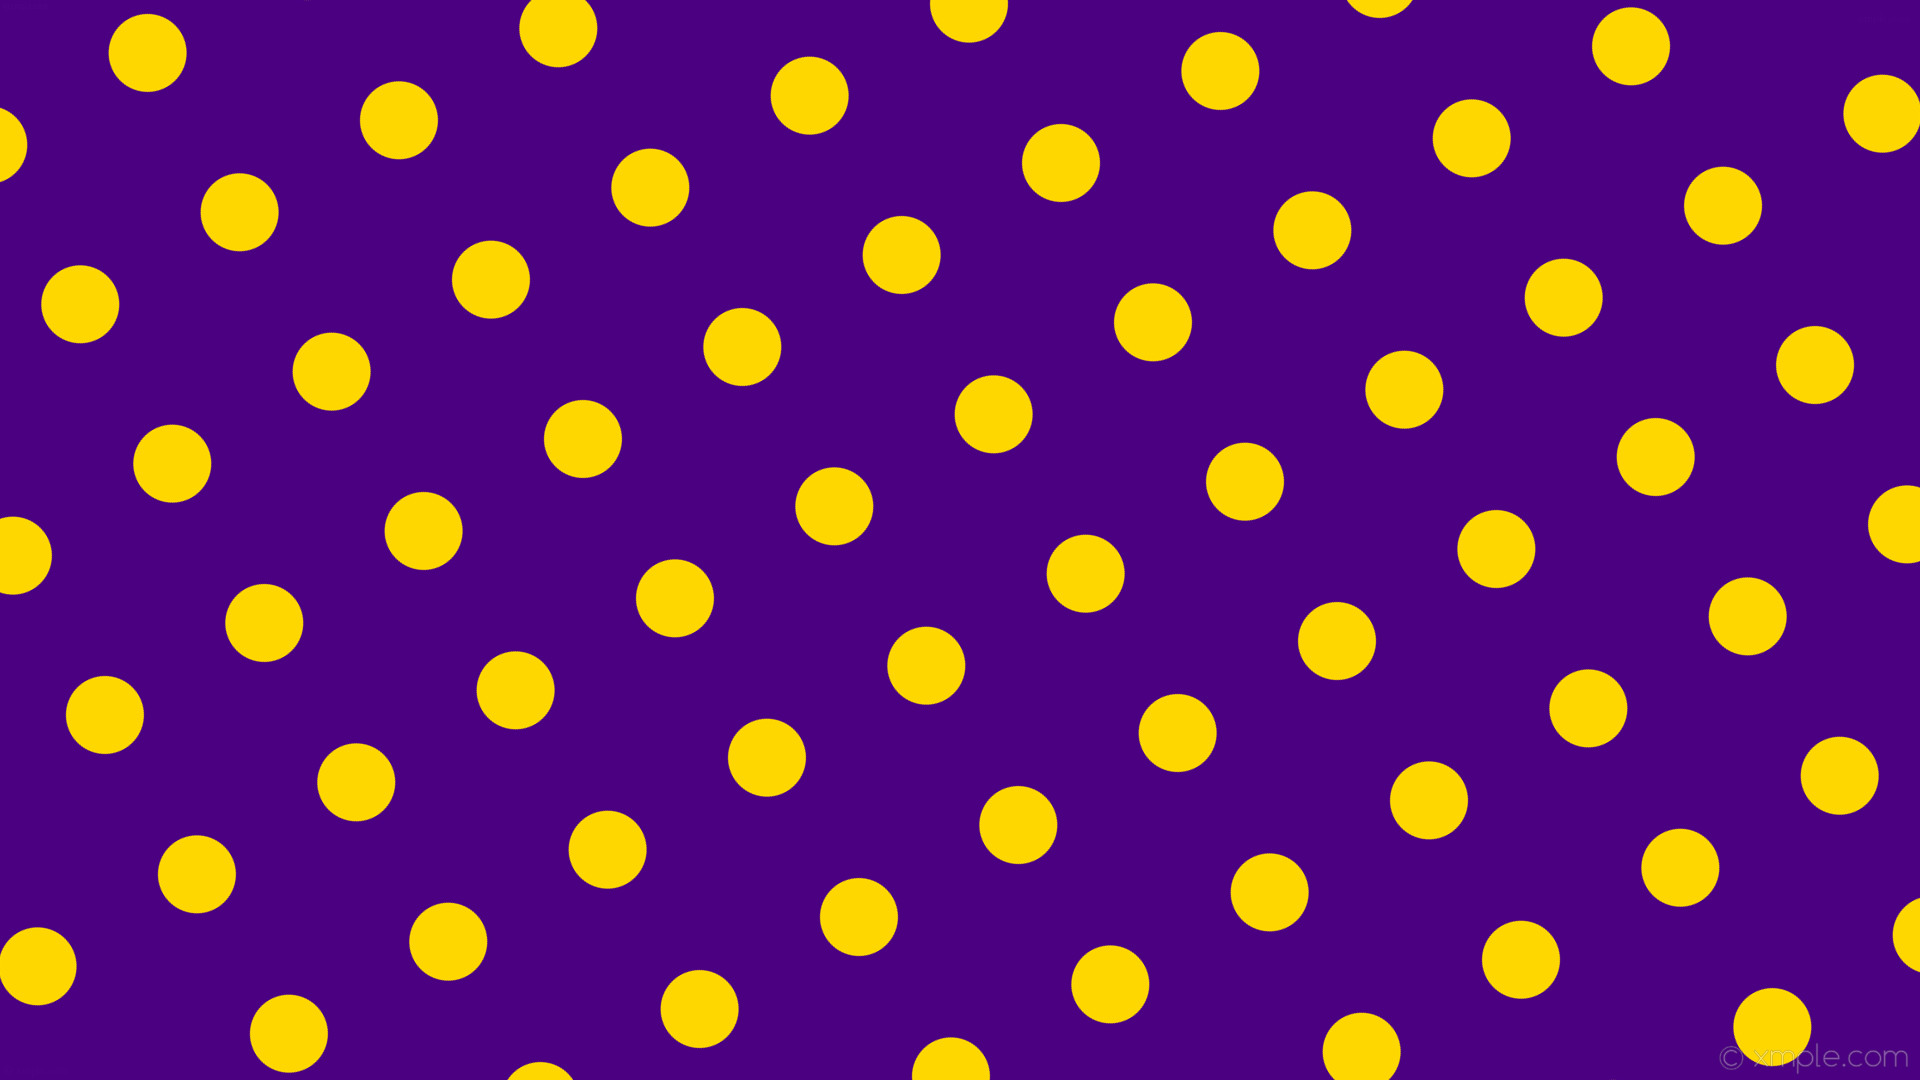 wallpaper purple yellow dots spots polka indigo gold #4b0082 #ffd700 120Â°  78px 184px